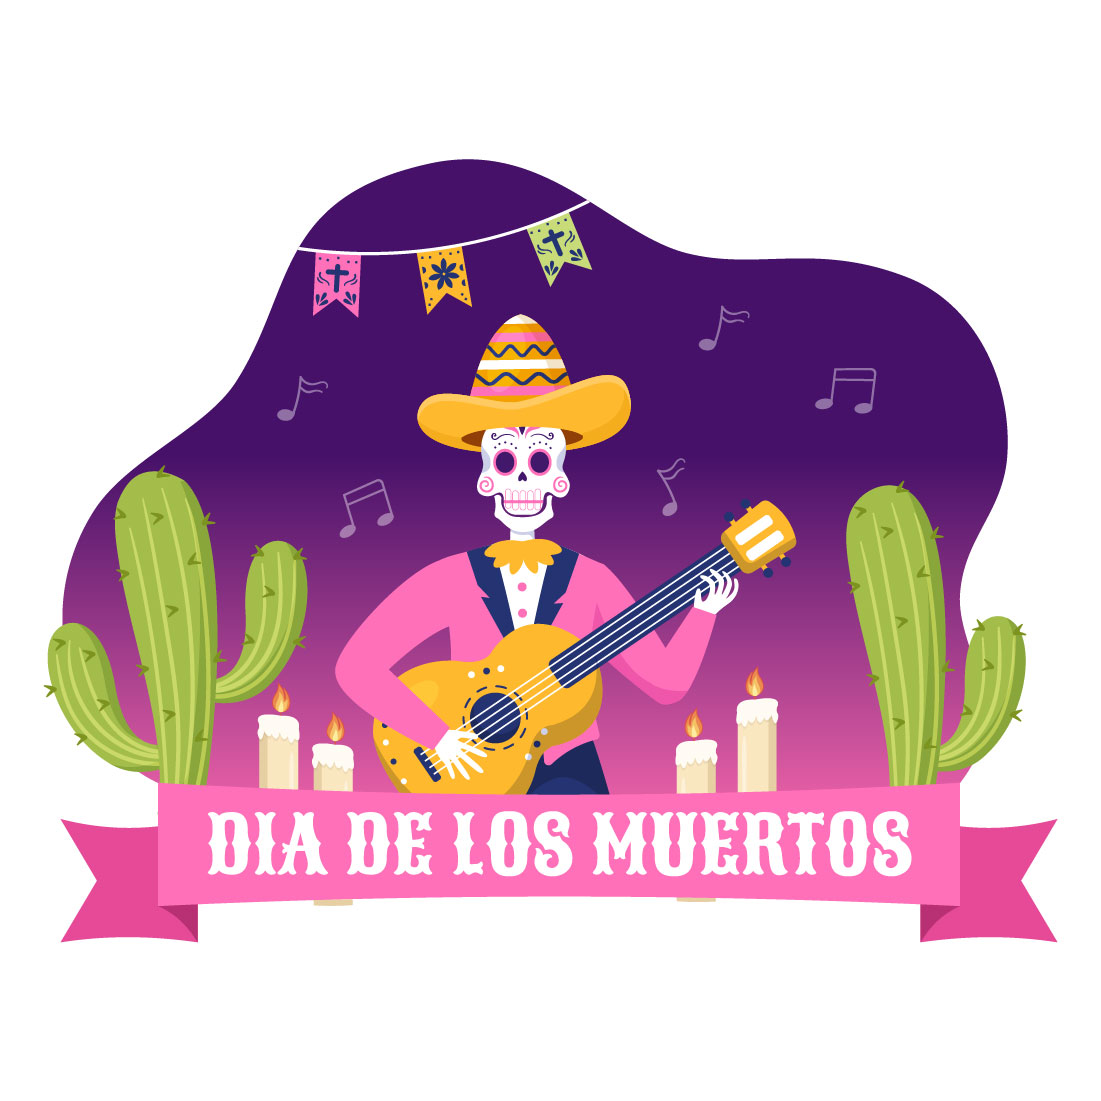 10 Dia De Los Muertos or Day of the Dead Illustration Cover Image.